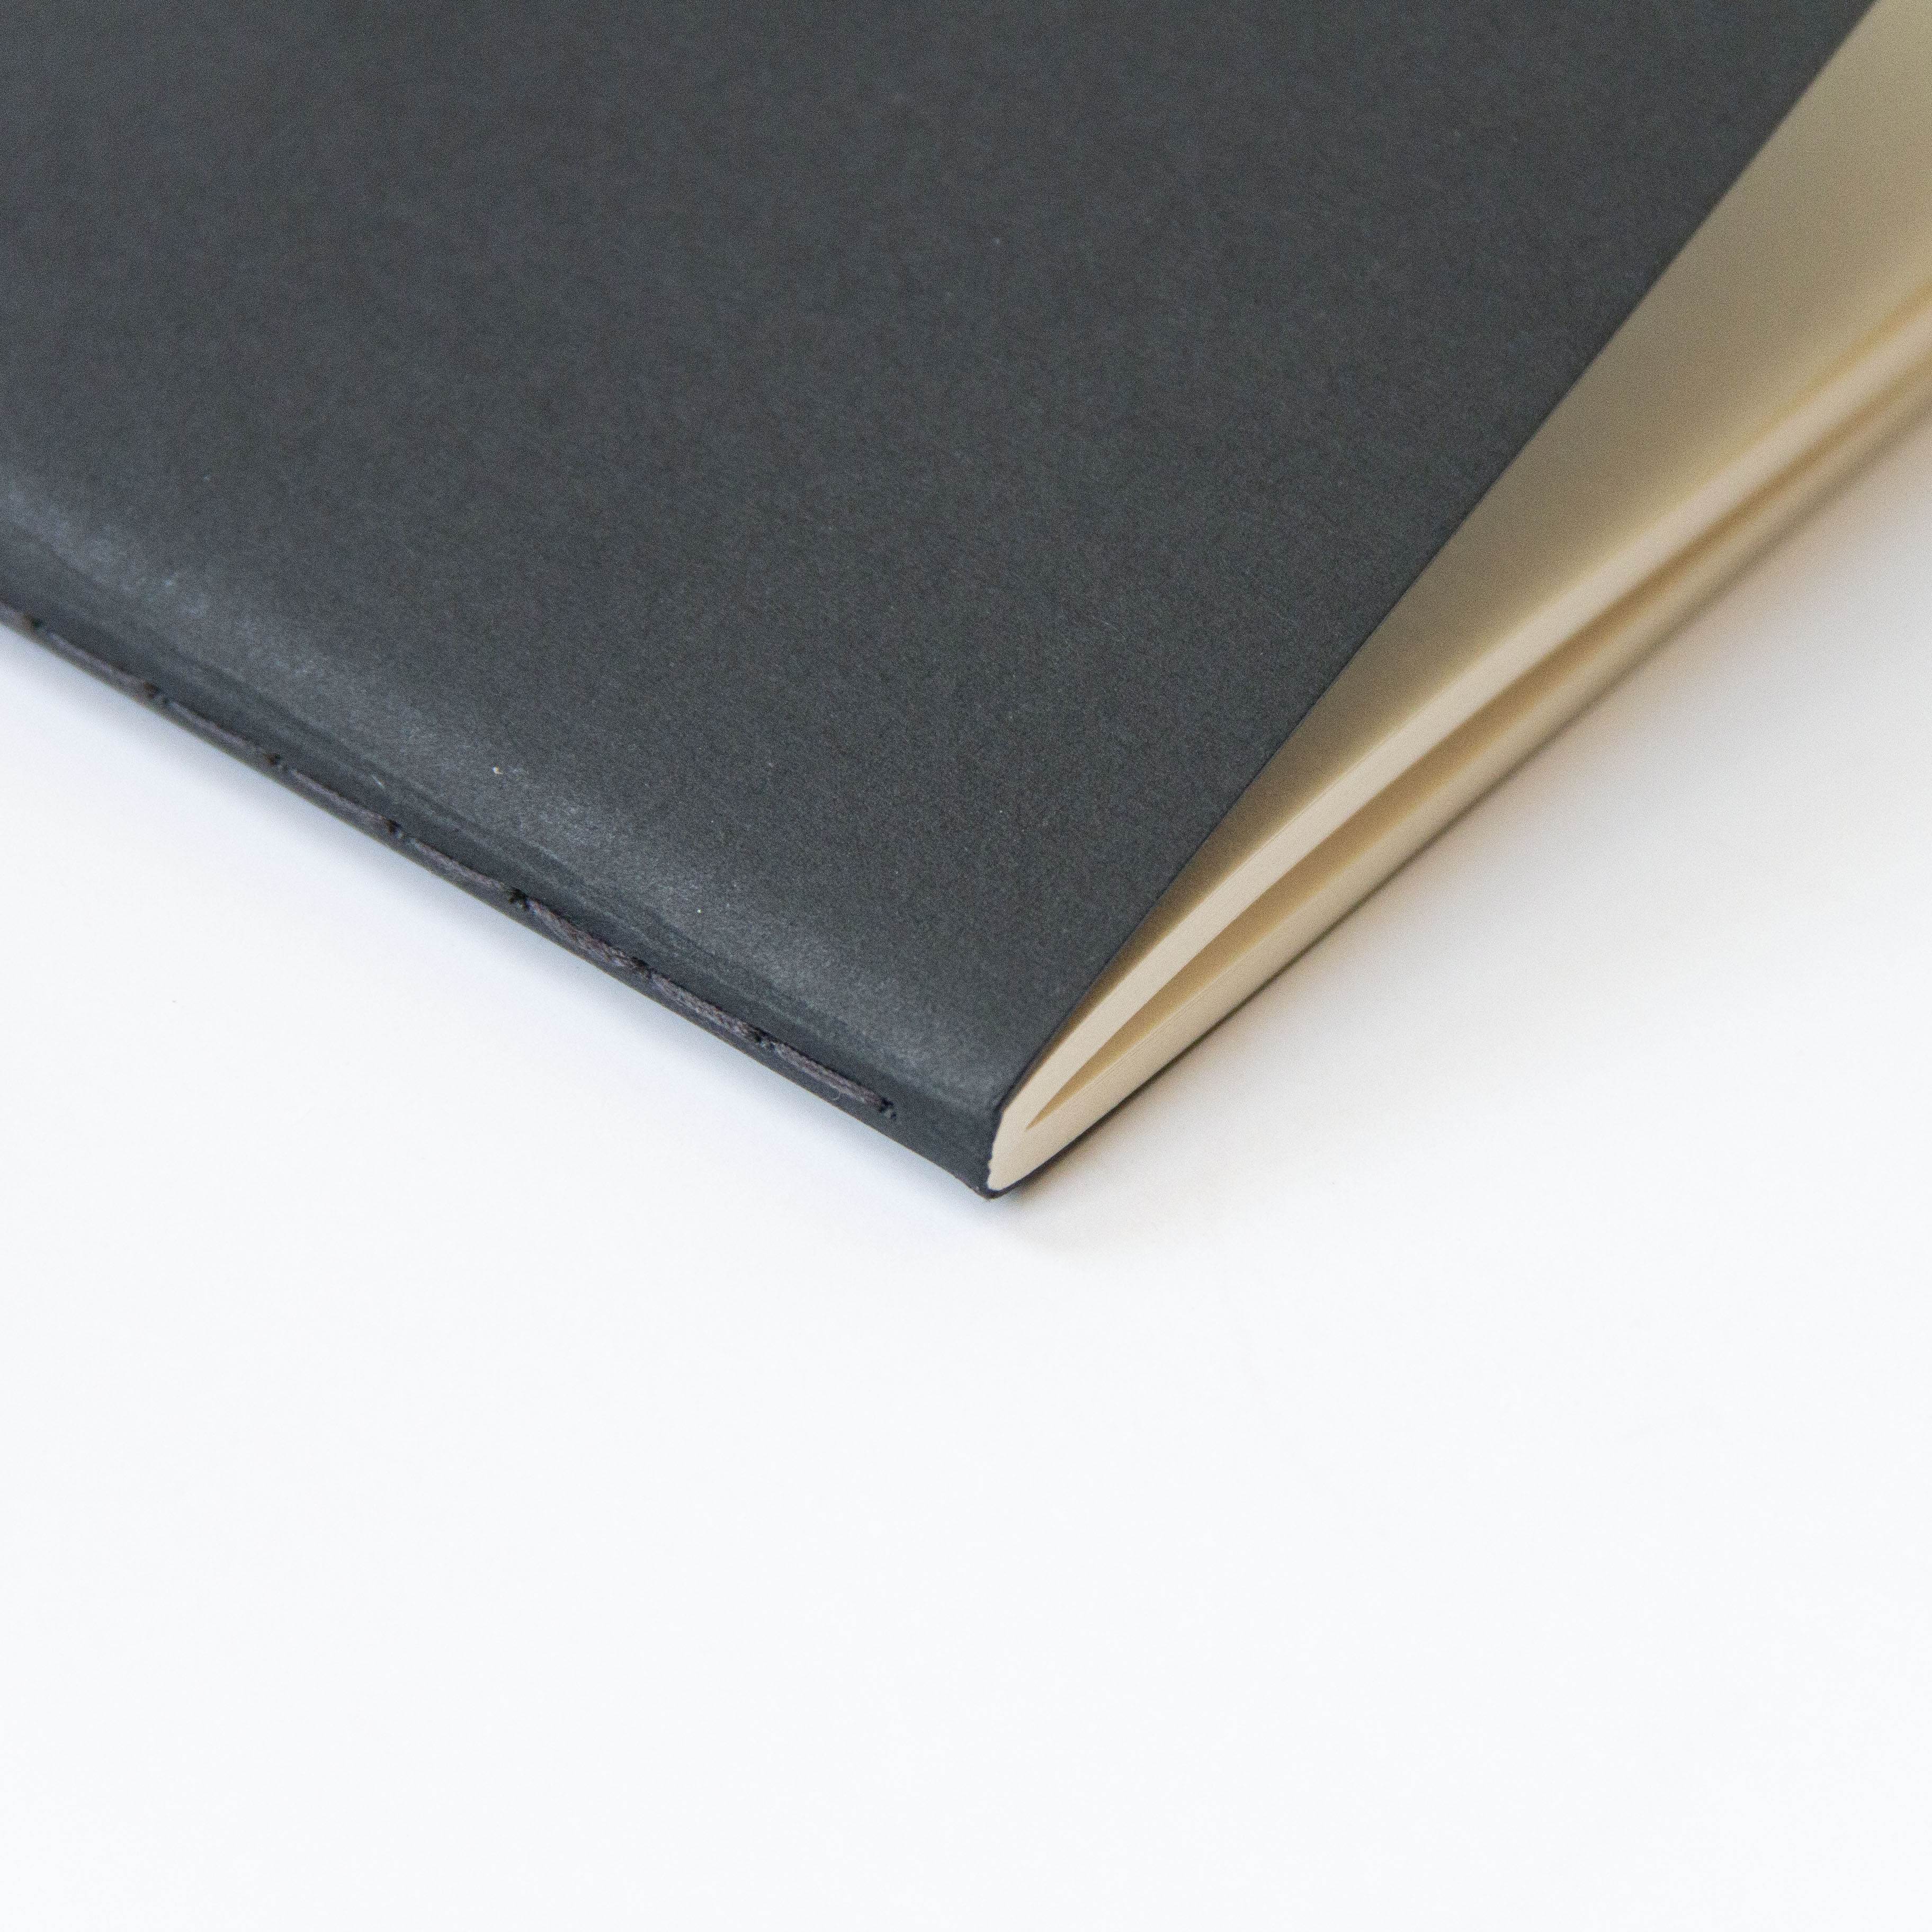 OCTÀGON DESIGN | "Black" notebook details. Binding with black thread.